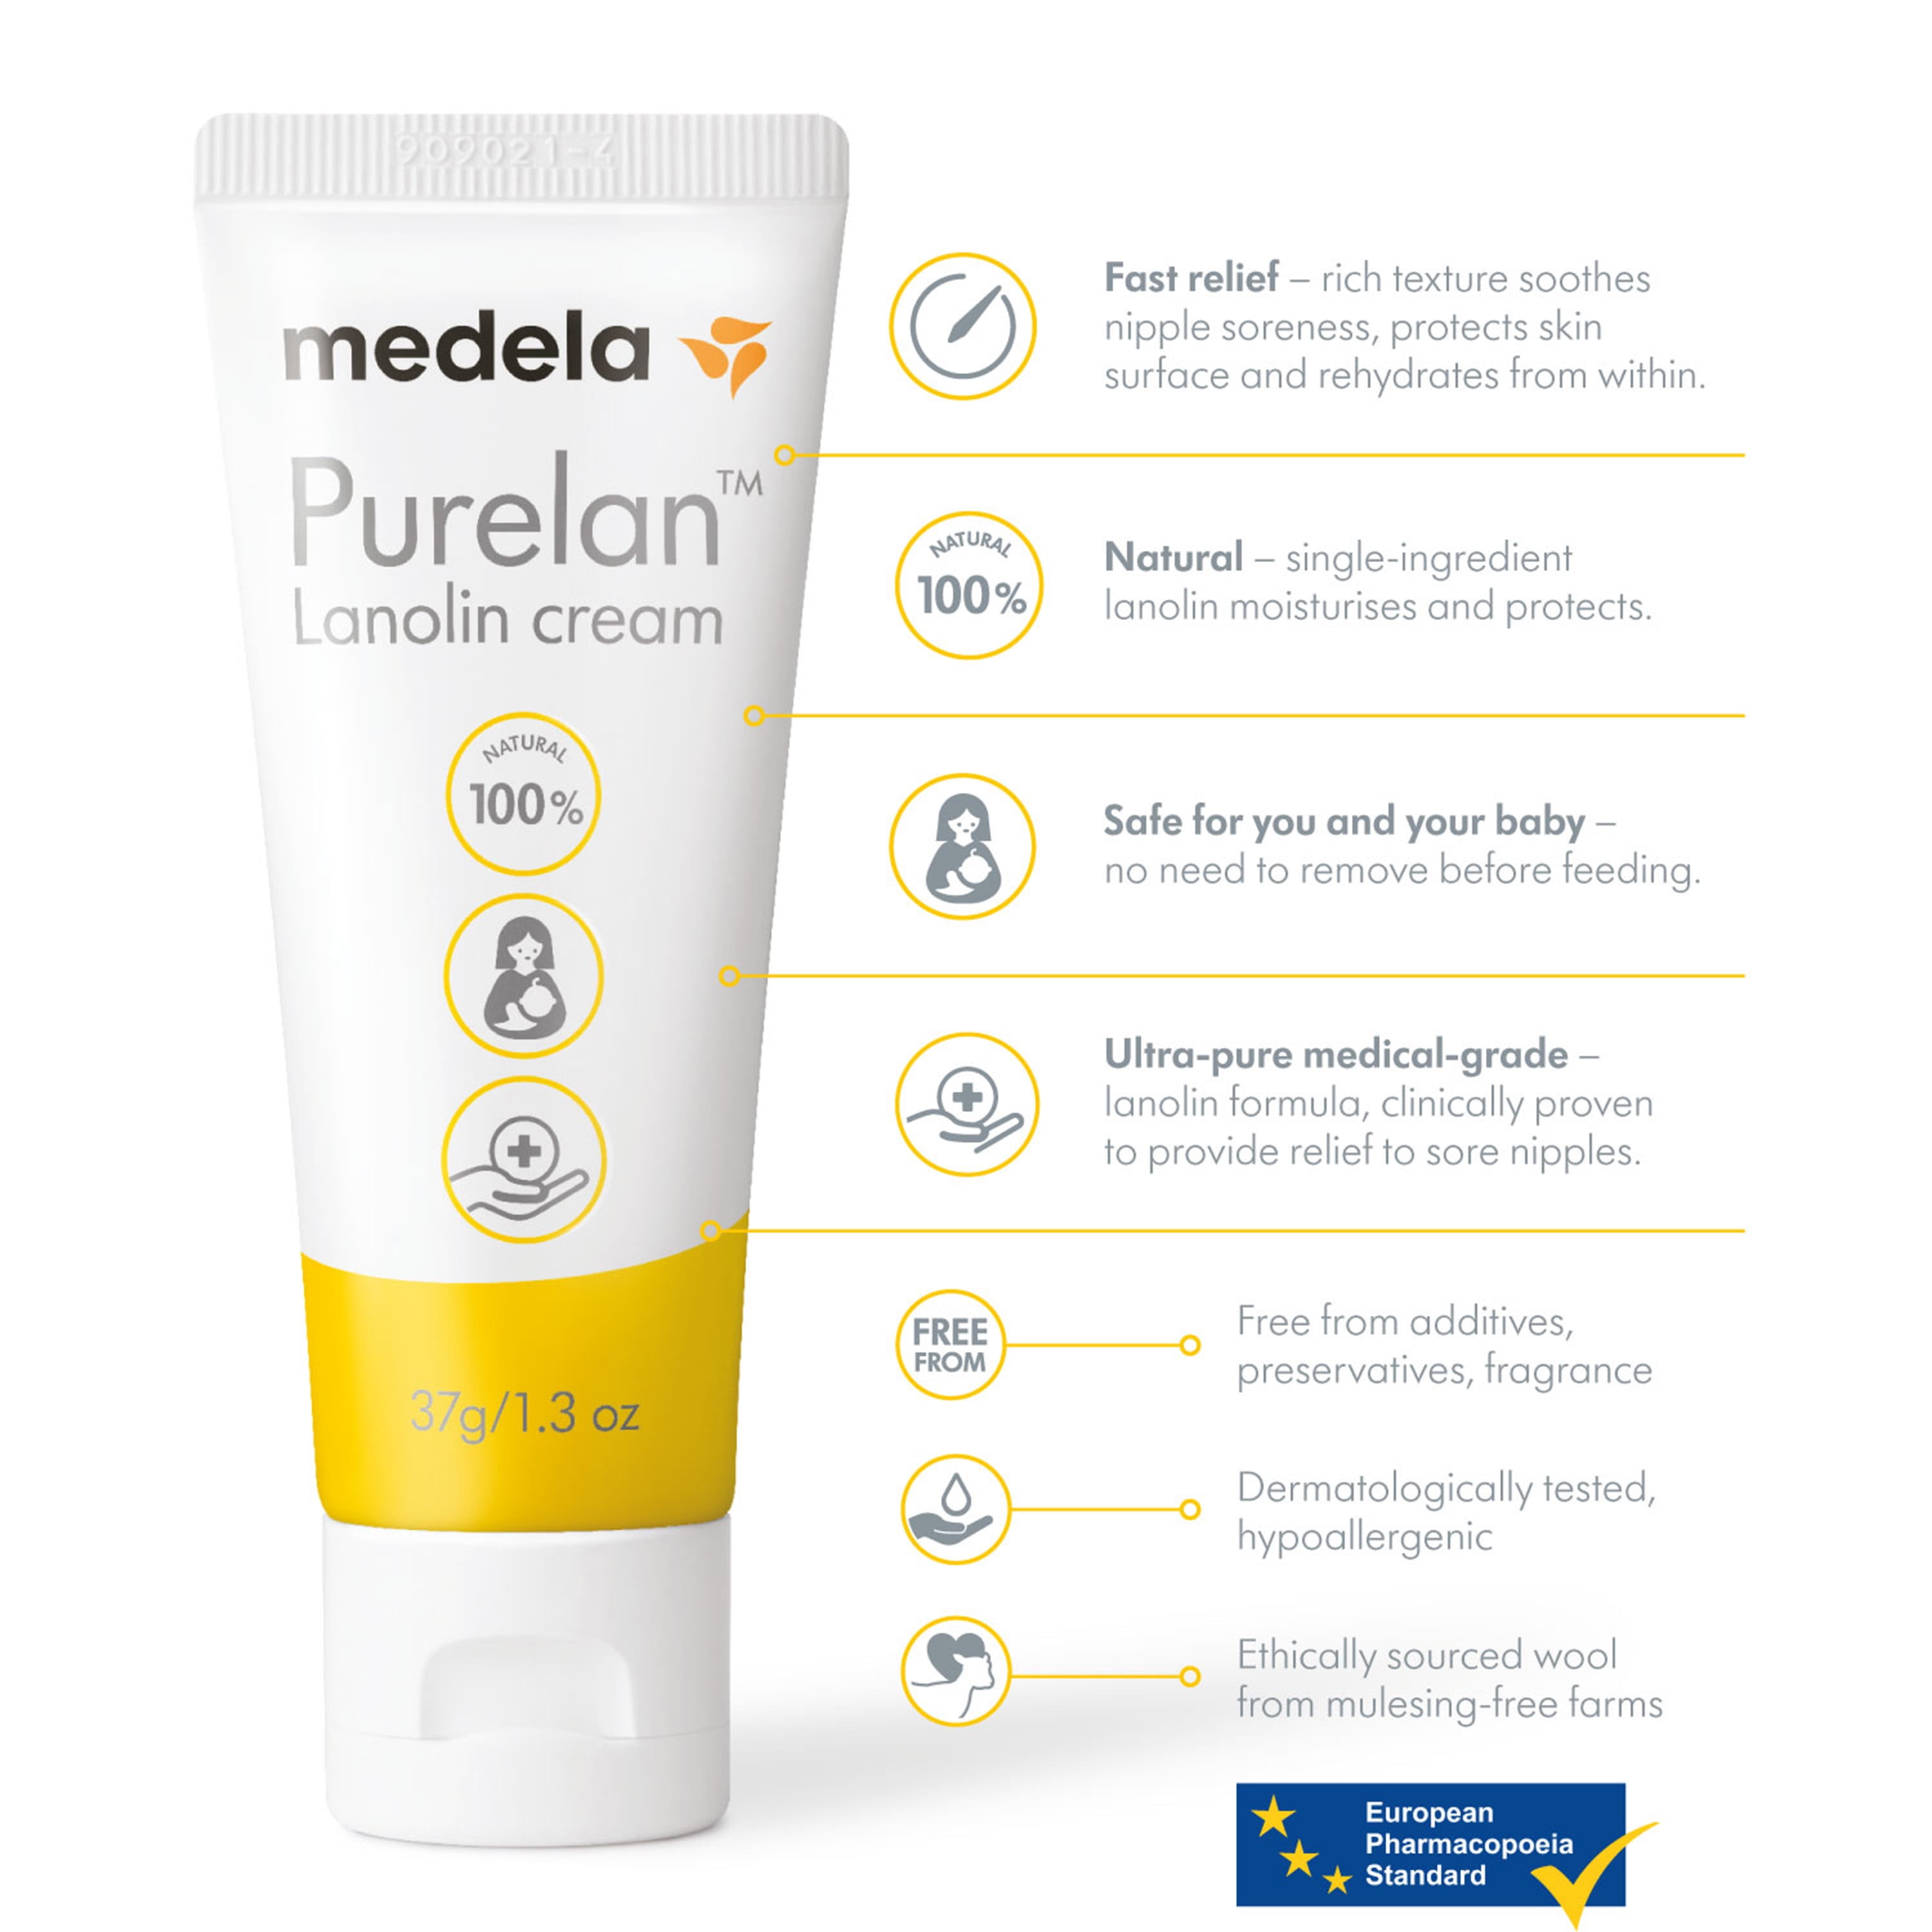 MEDELA crème pour mamelons PureLan 100-37 G - Medela - Bébé Maman